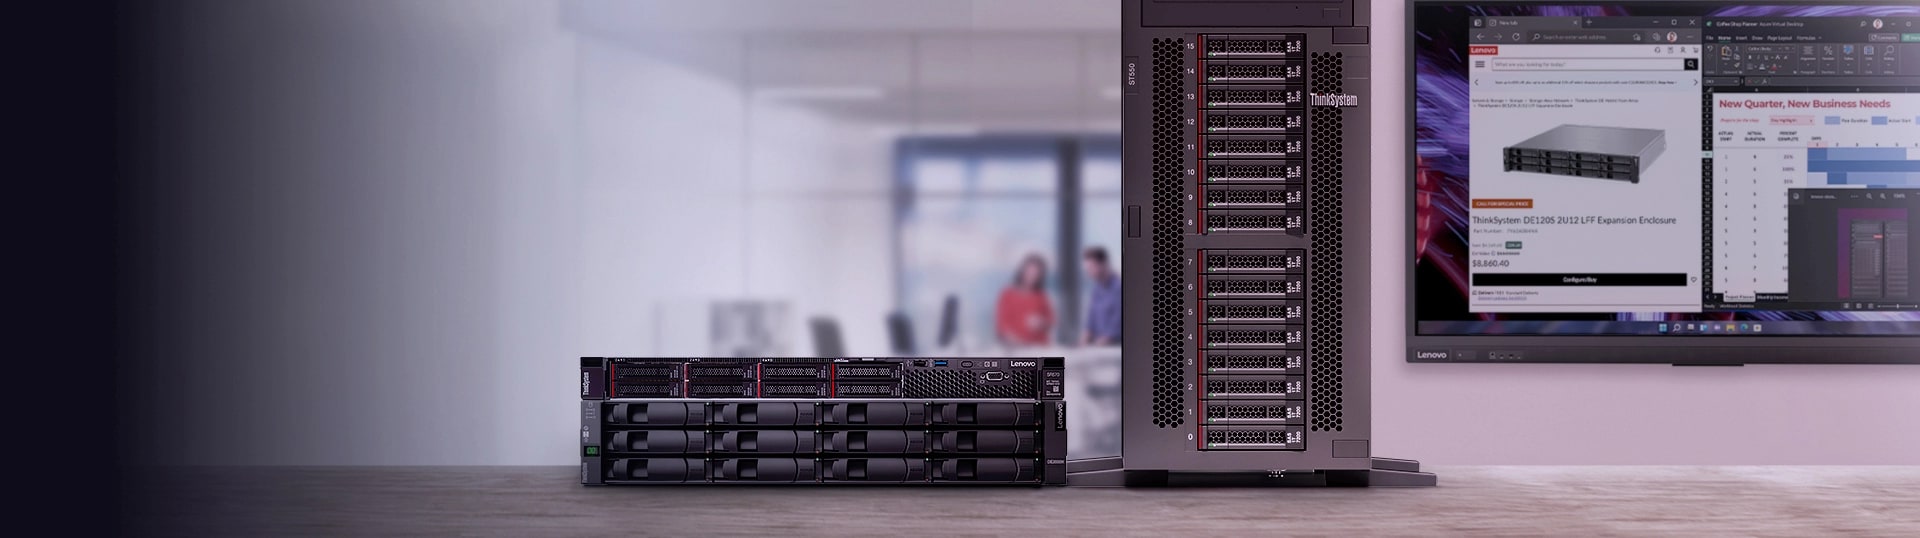  A Lenovo ThinkSystem Tower server, ThinkSystem Rack server and a Storage on a desk.